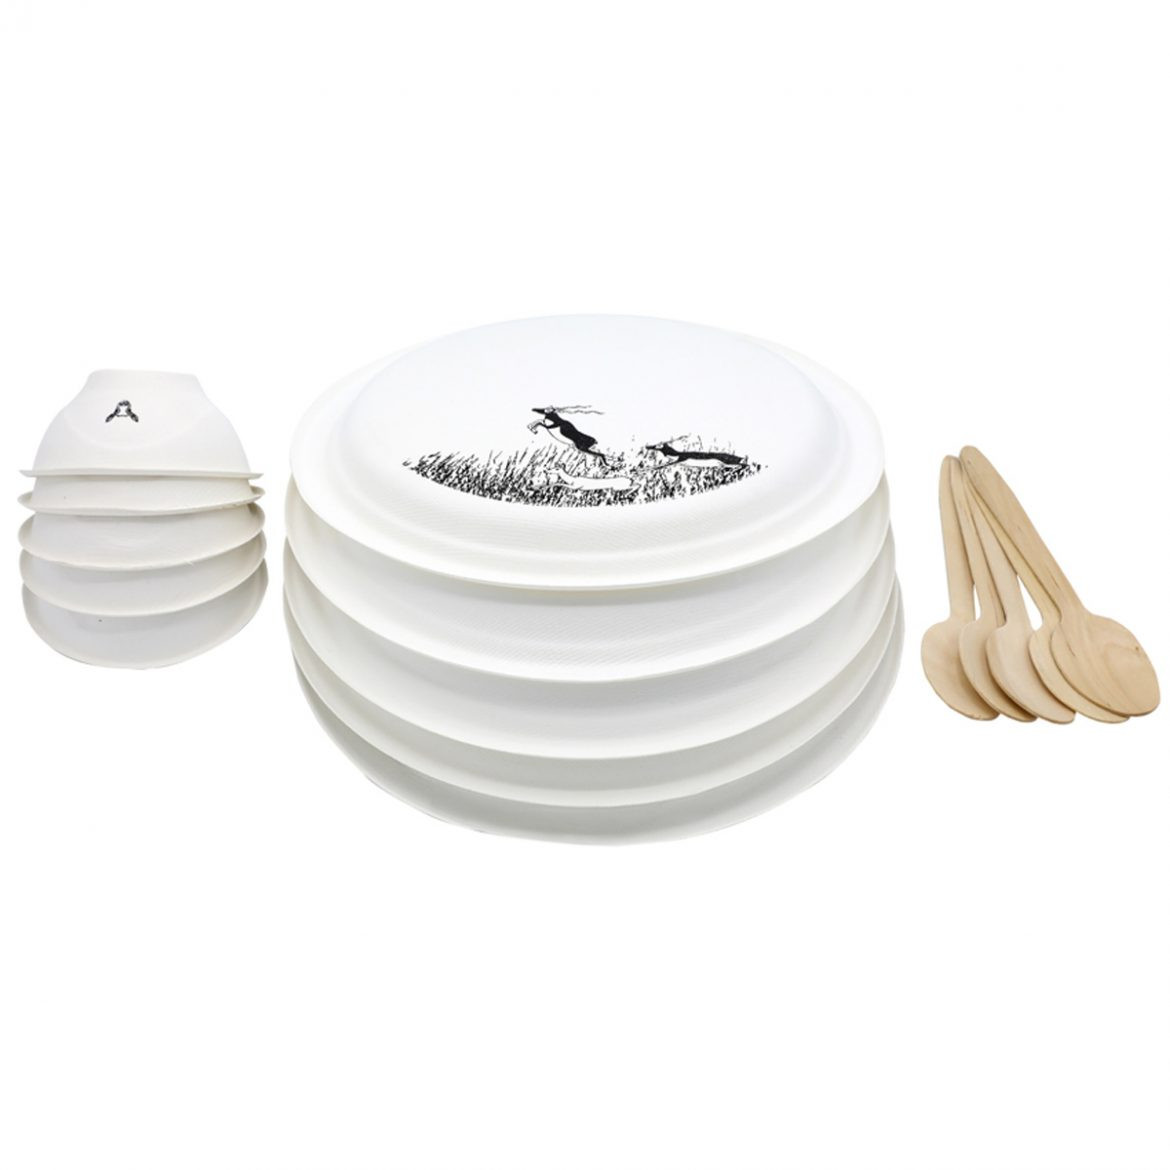 Baggase Plate & Bowl Bamboo Spoon Set 0f 50pcs